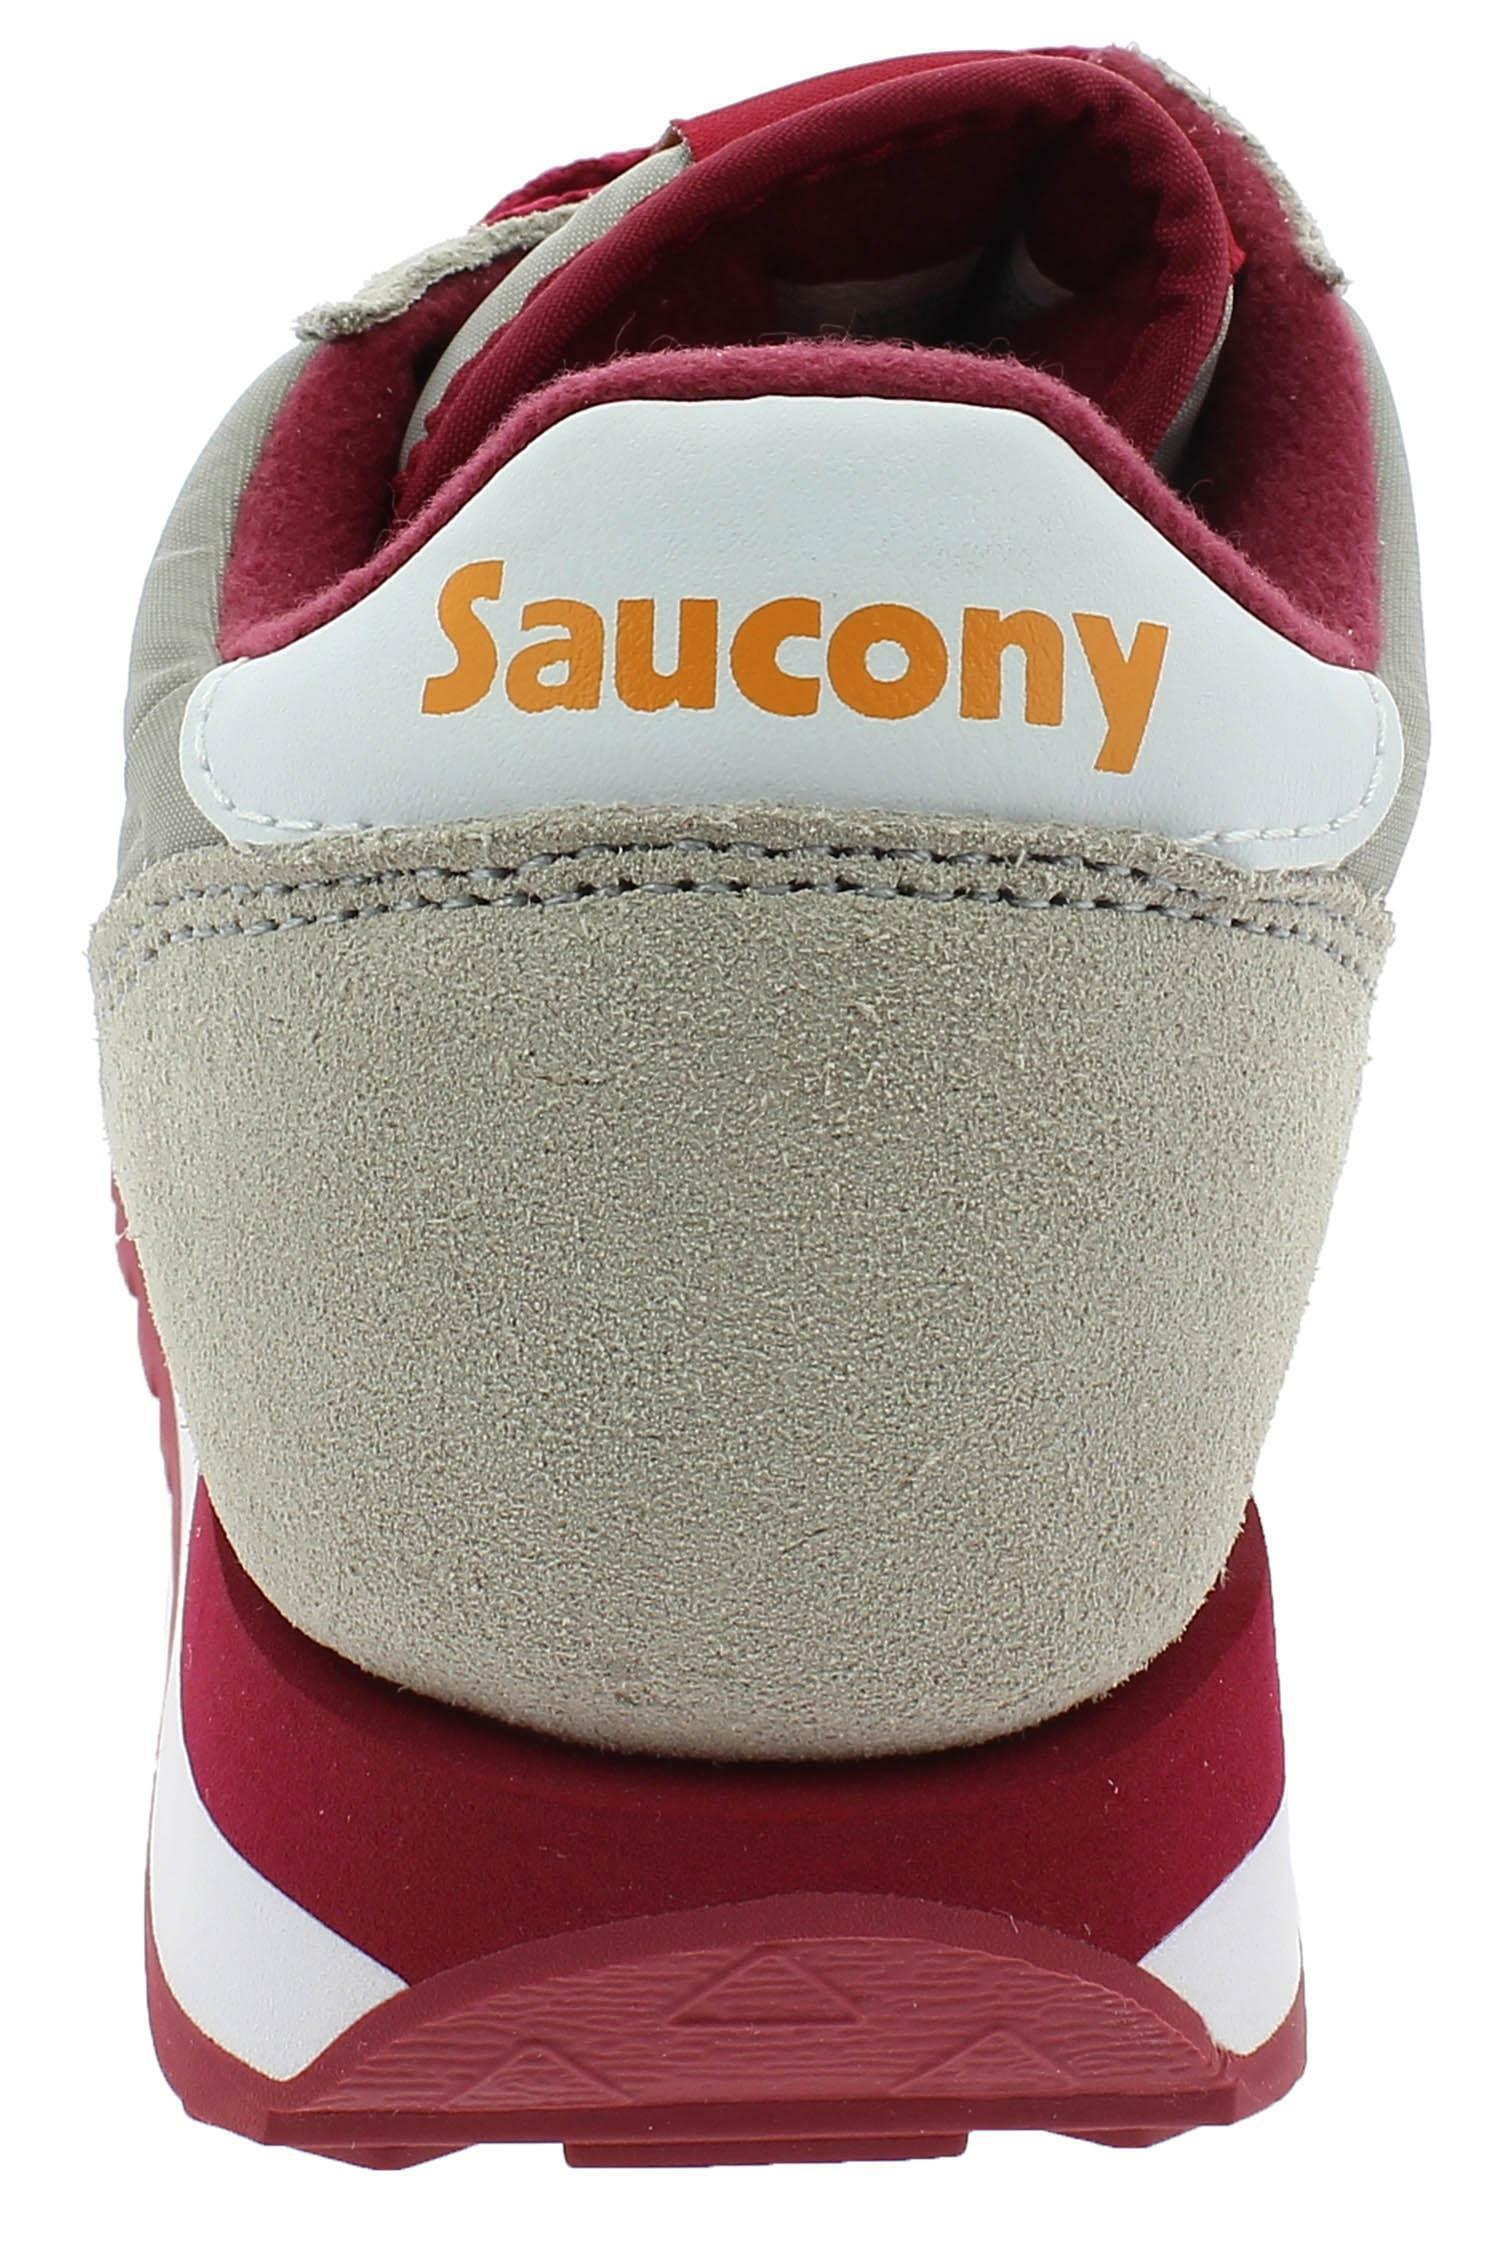 saucony saucony jazz original scarpe sportive donna grigie s1044342